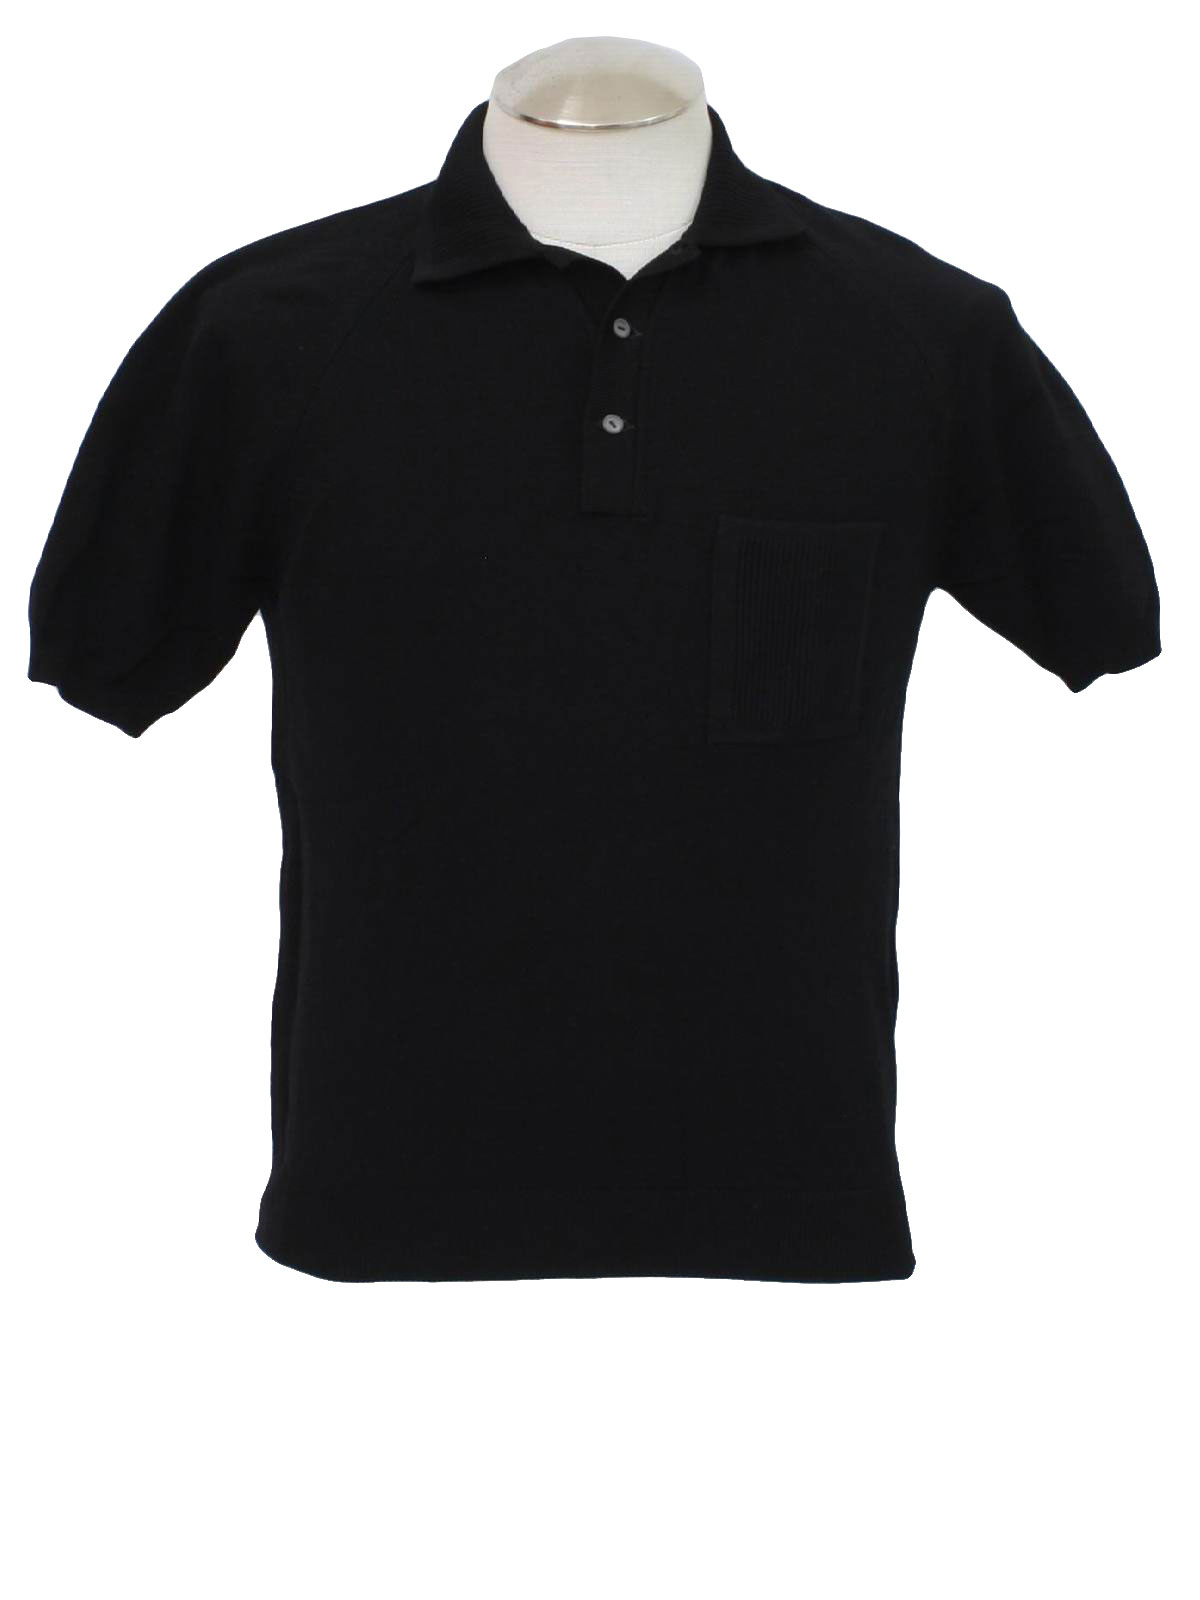 60s Vintage Knit Shirt: Early 60s -No Label- Mens black Ban Lon type ...